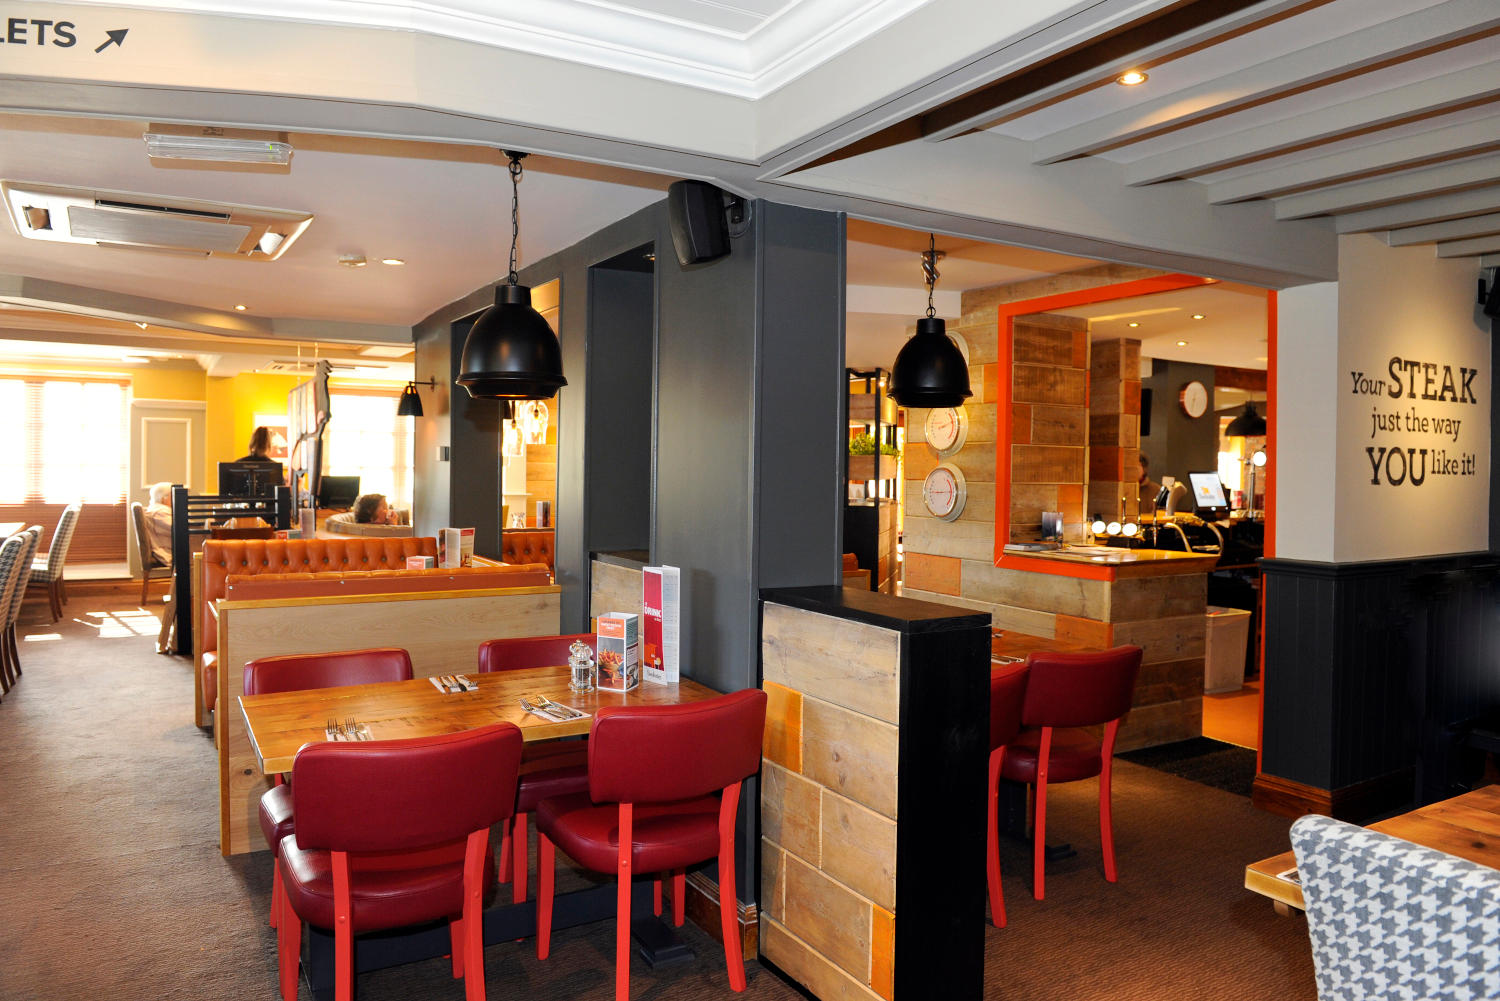 Beefeater restaurant Premier Inn Petersfield hotel Petersfield 03333 211391